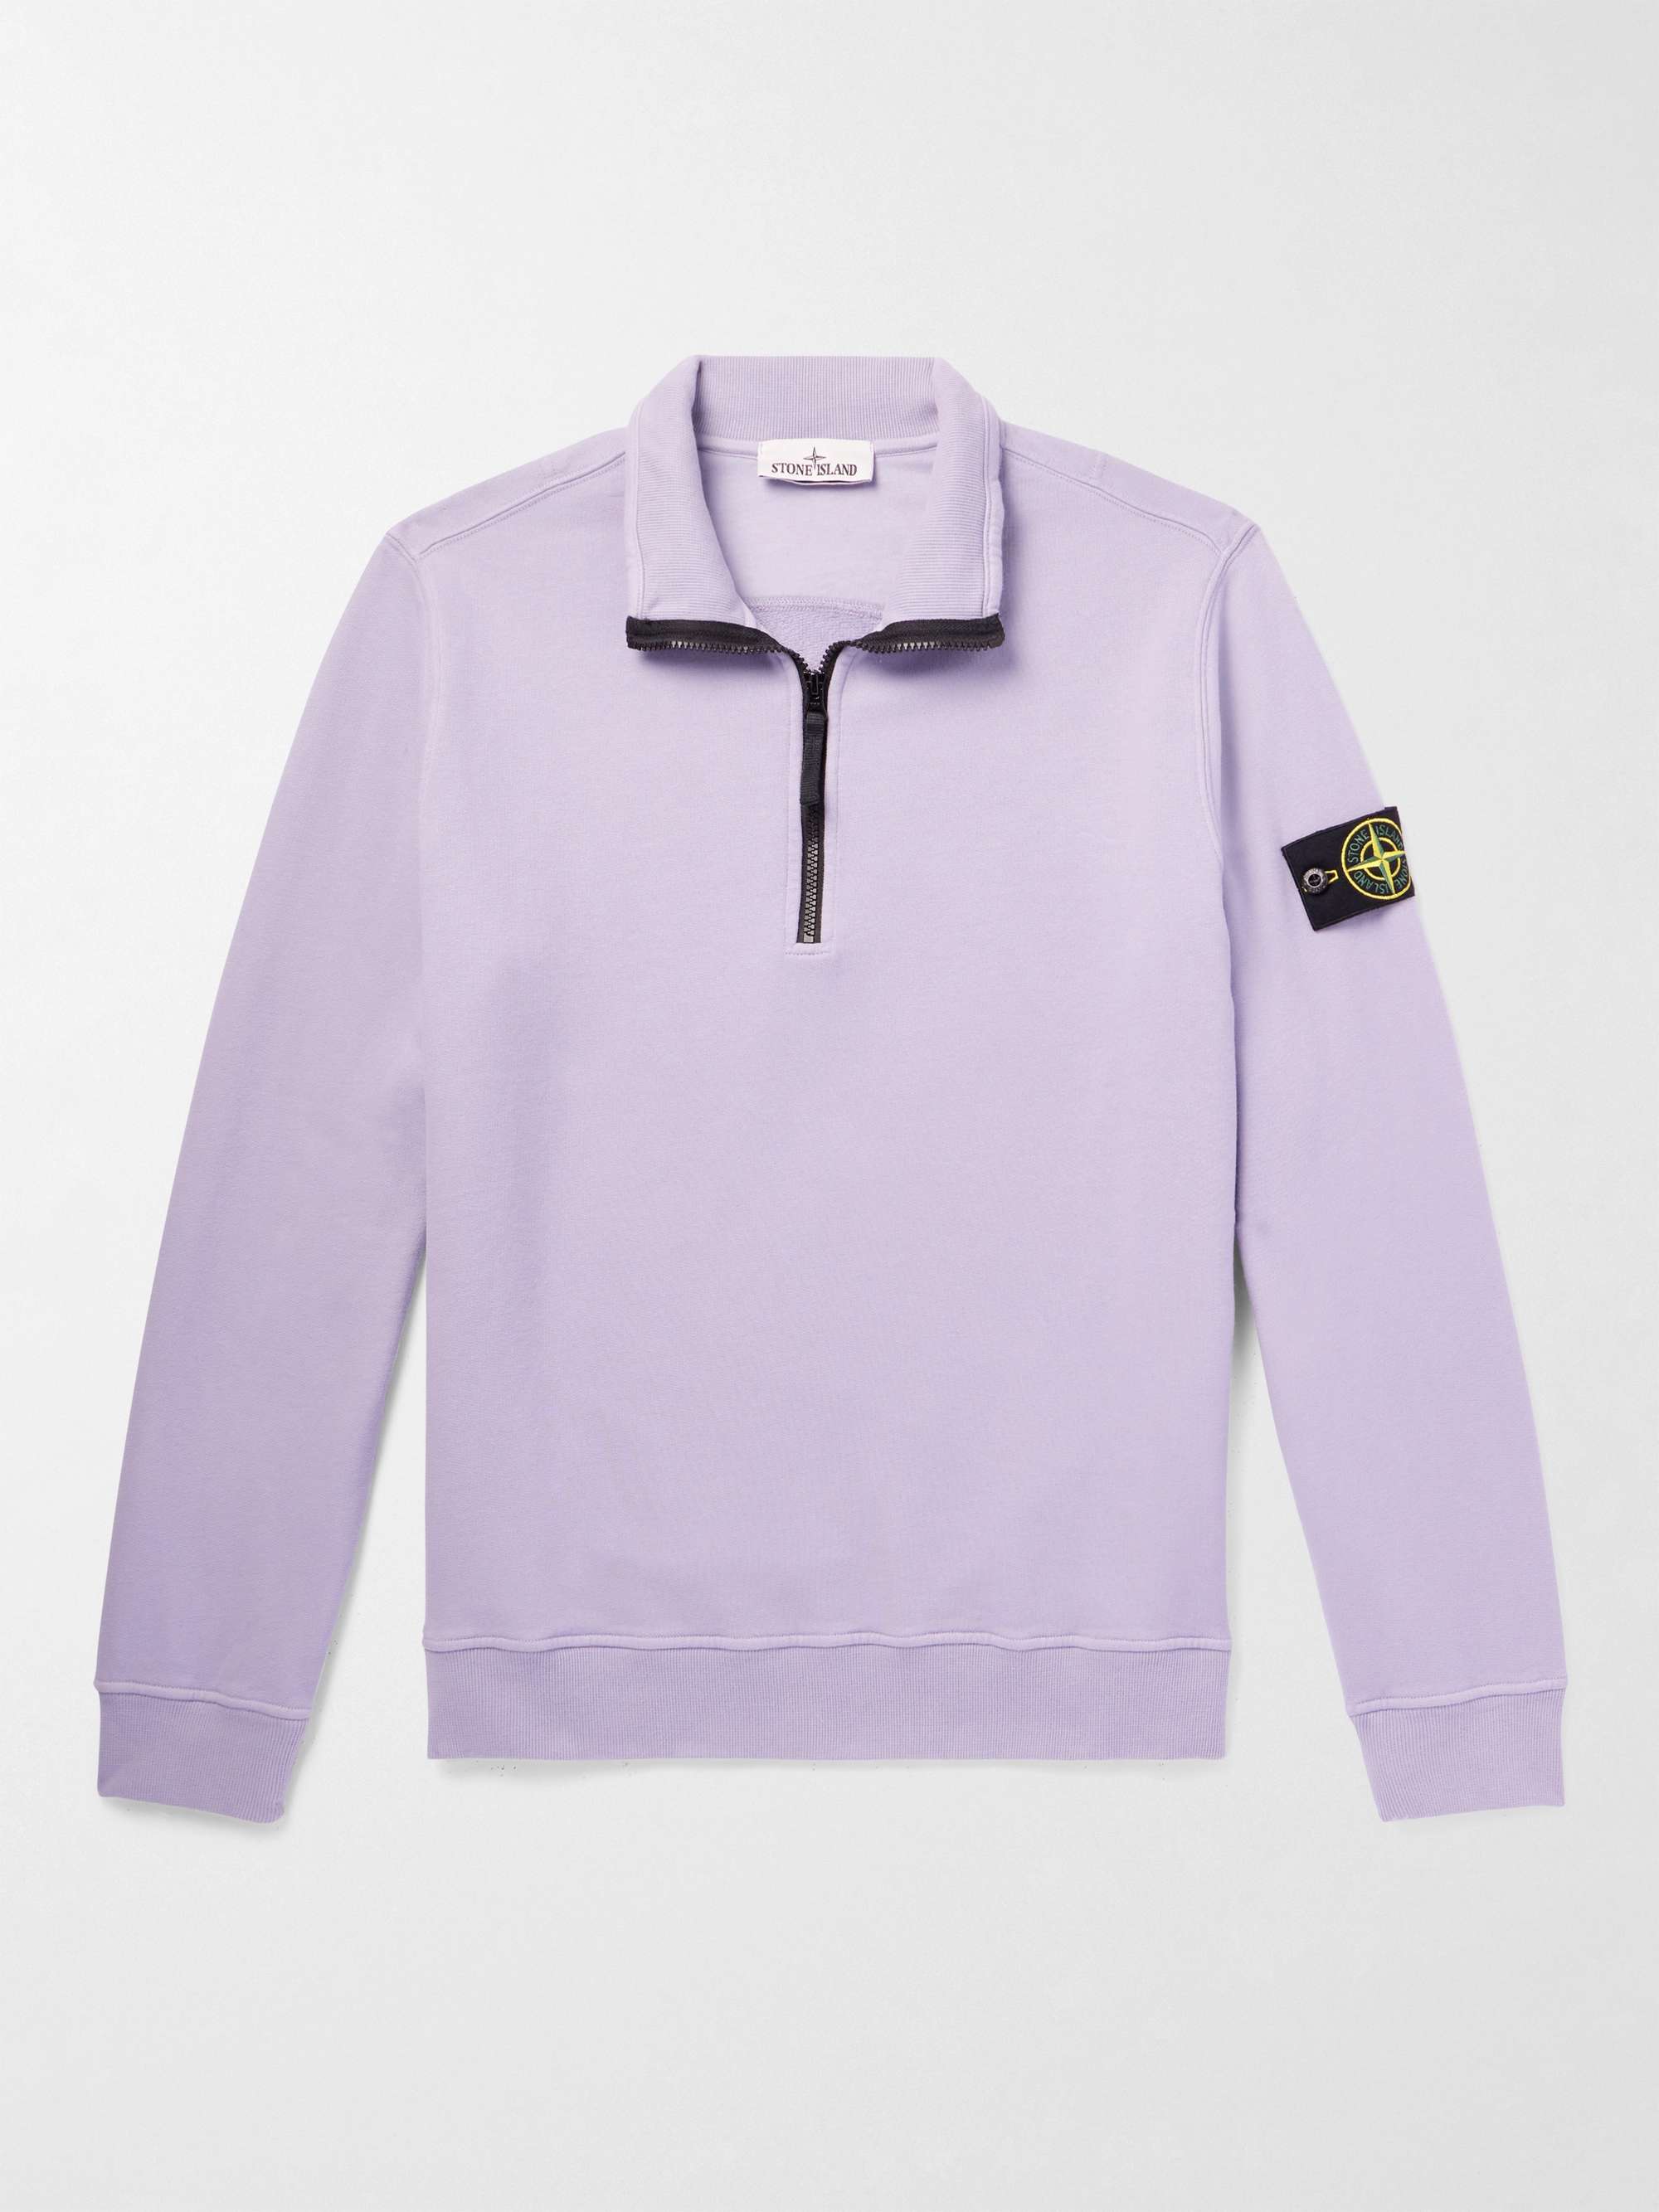 STONE ISLAND Logo-Appliquéd Garment-Dyed Cotton-Jersey Half-Zip Sweatshirt  for Men | MR PORTER